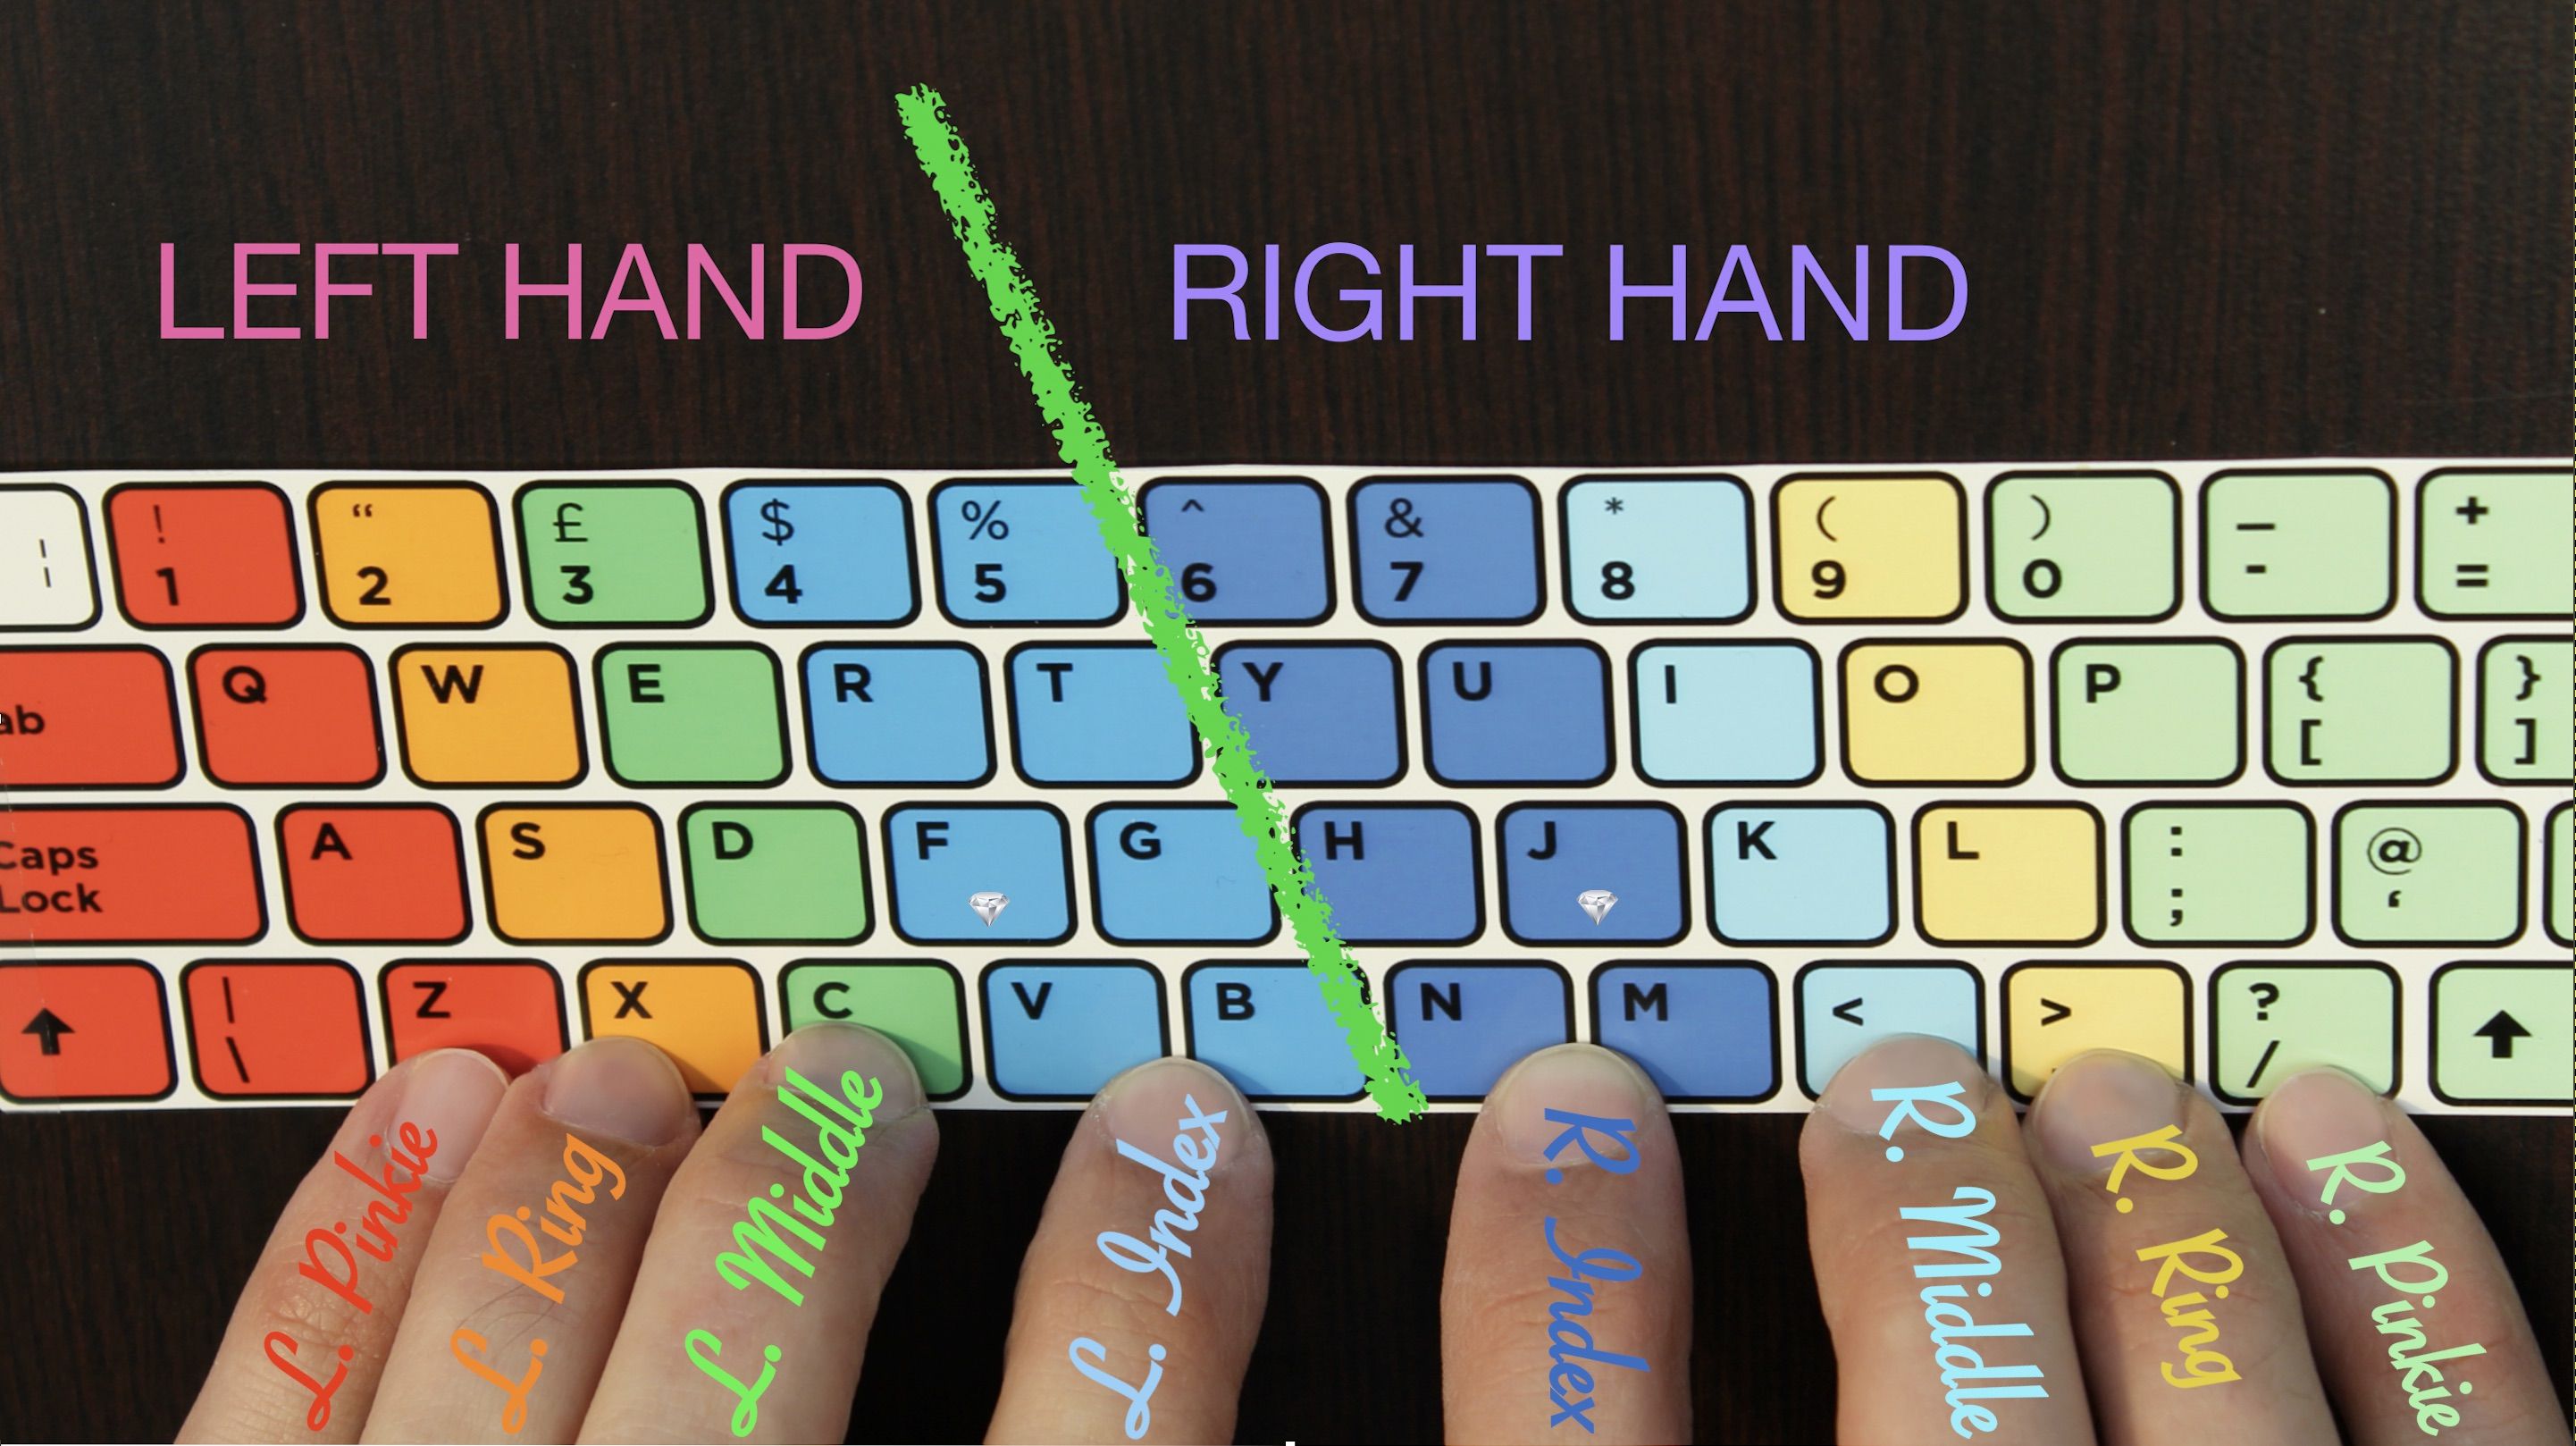 10 пальцевый метод печати. Слепой десятипальцевый метод печати. Расположение пальцев на клавиатуре. Схема клавиатуры для слепой печати. Быстрая печать на клавиатуре.